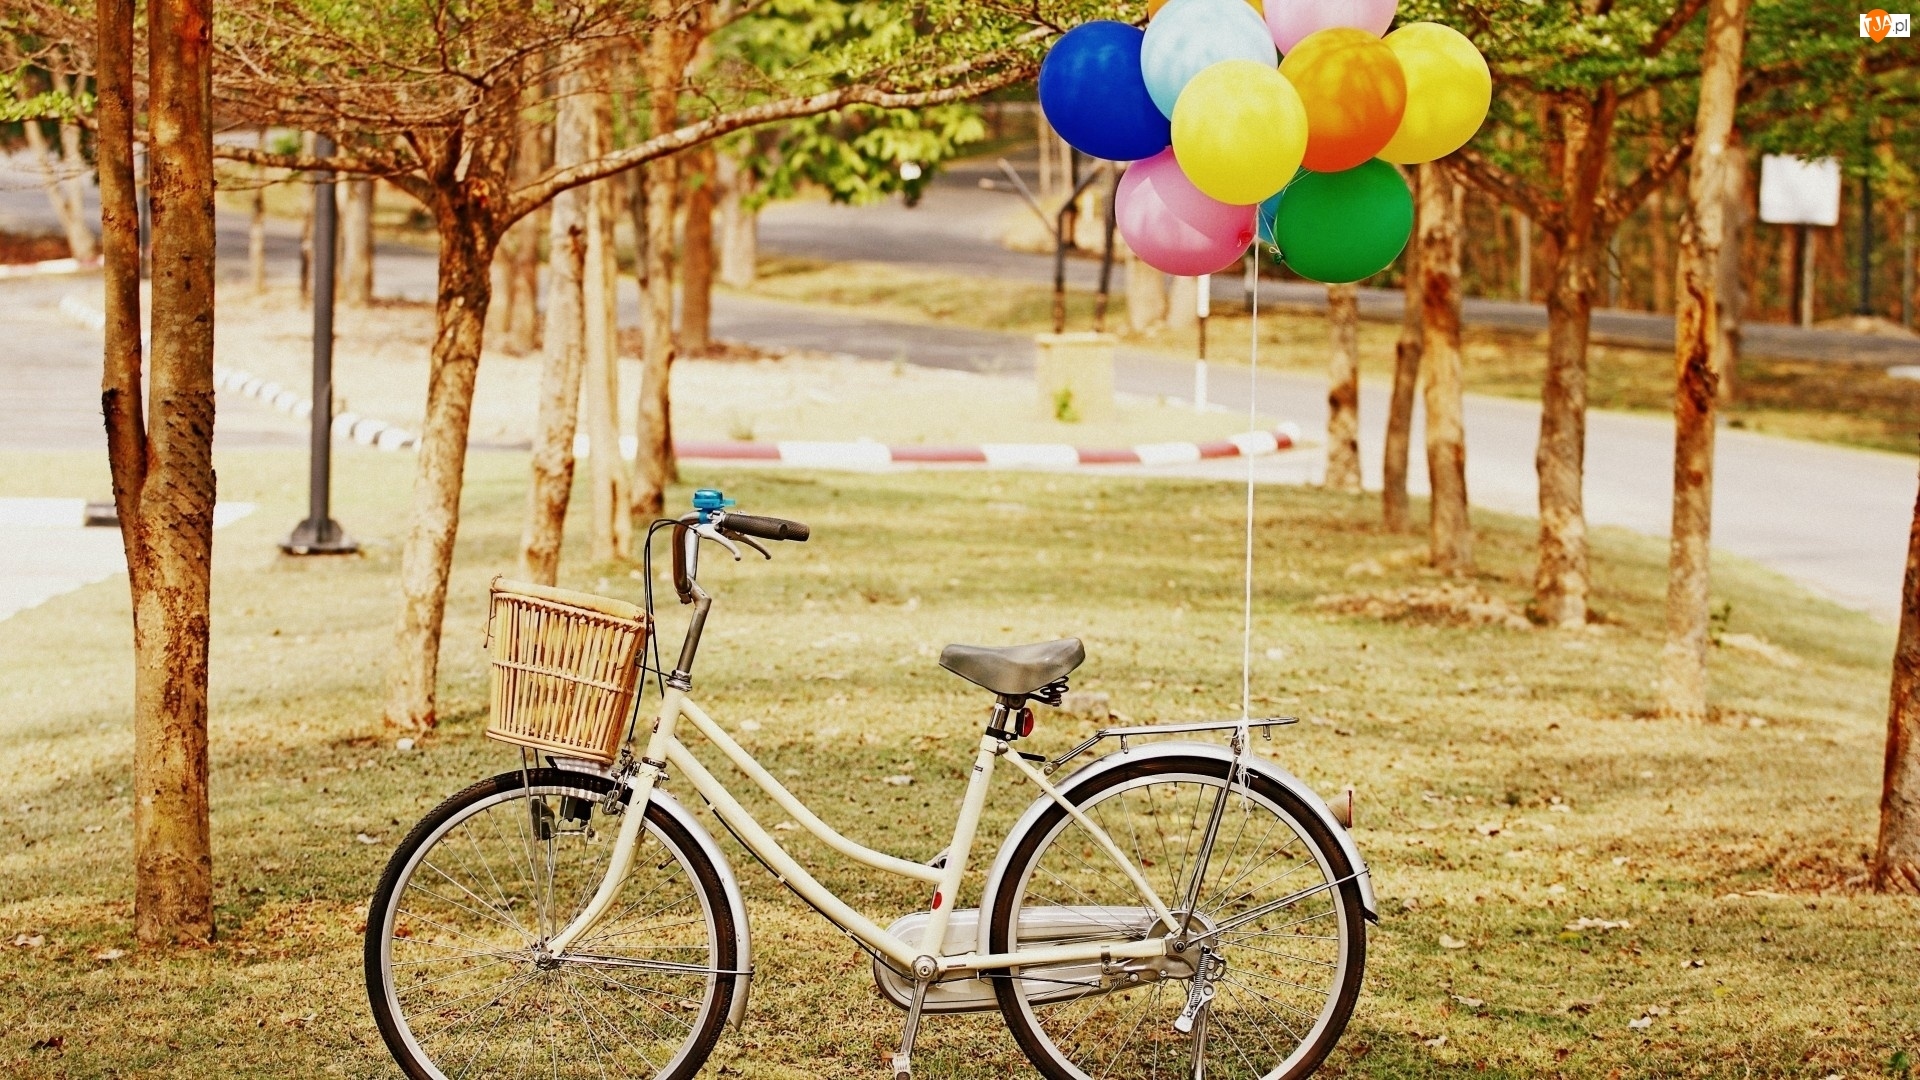 Balony, Rower, Park